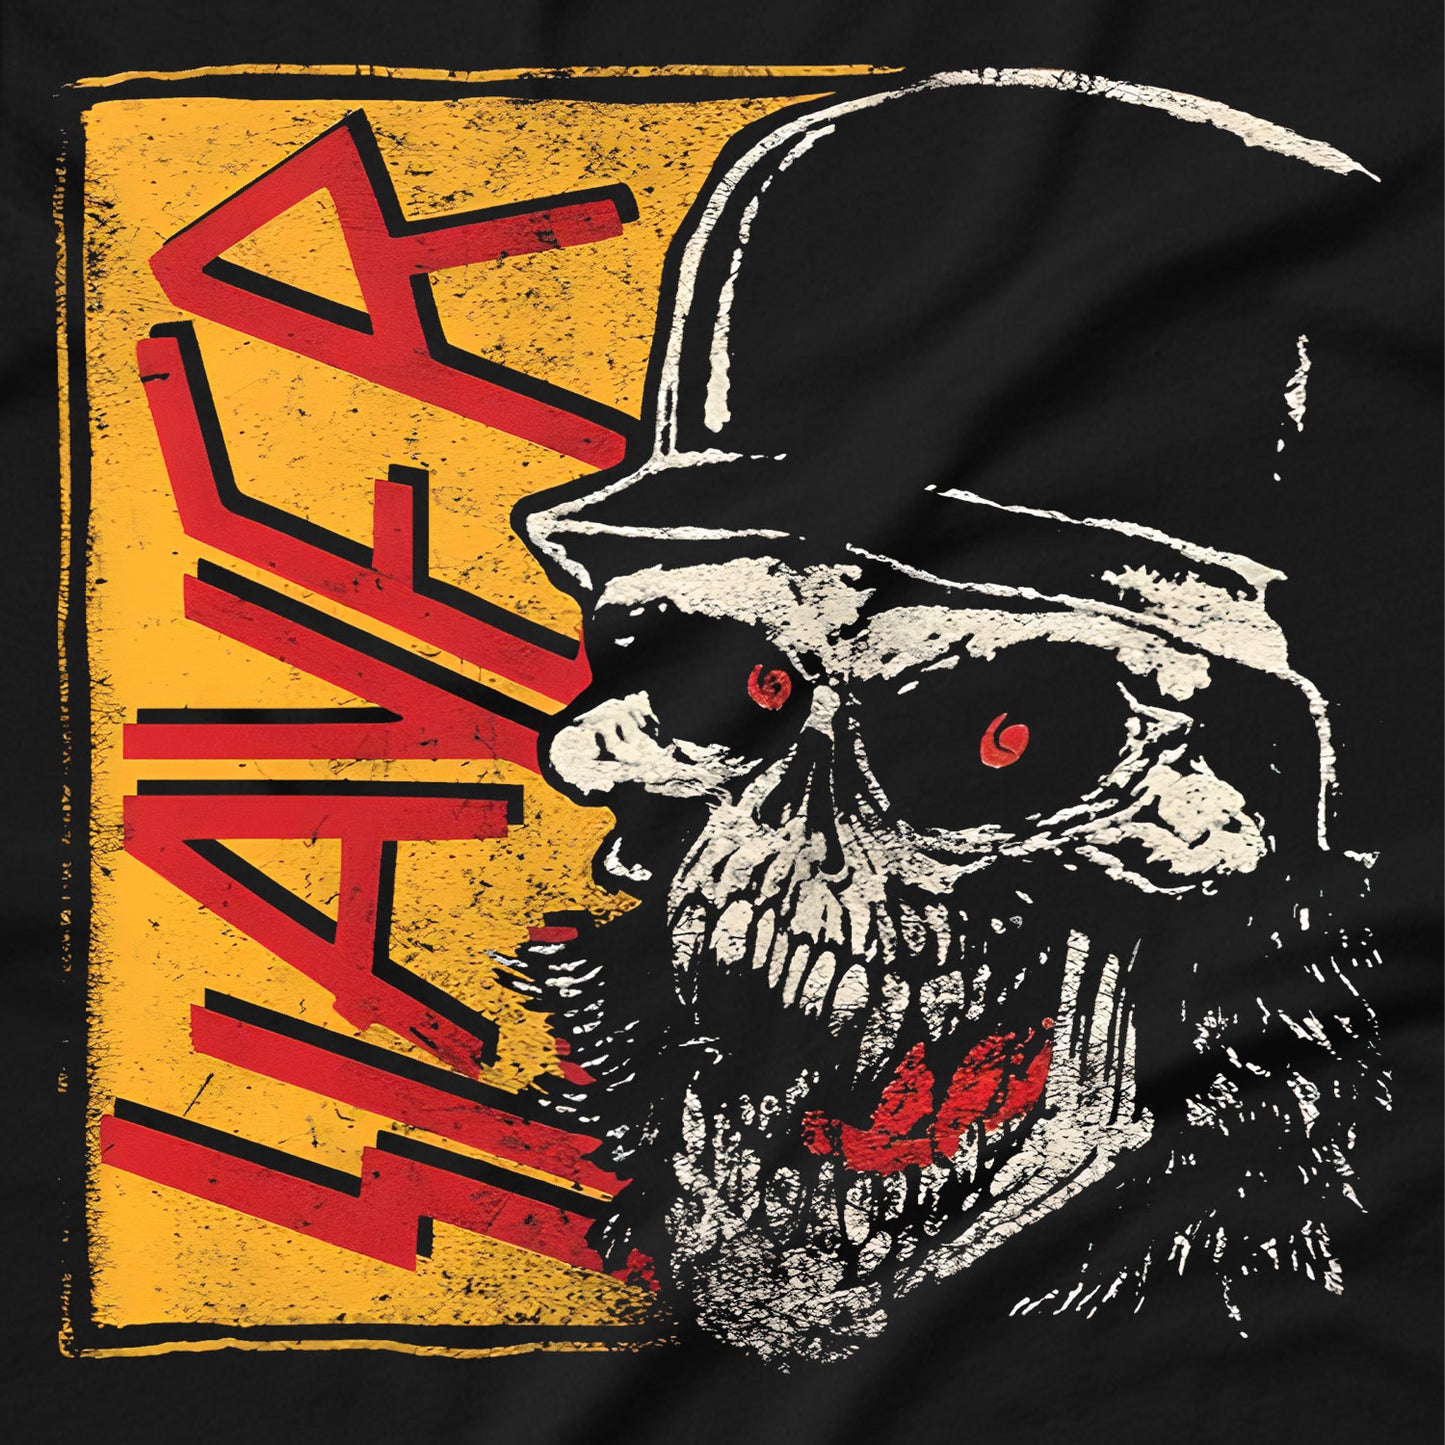 Slayer - Laughing Skull T-Shirt